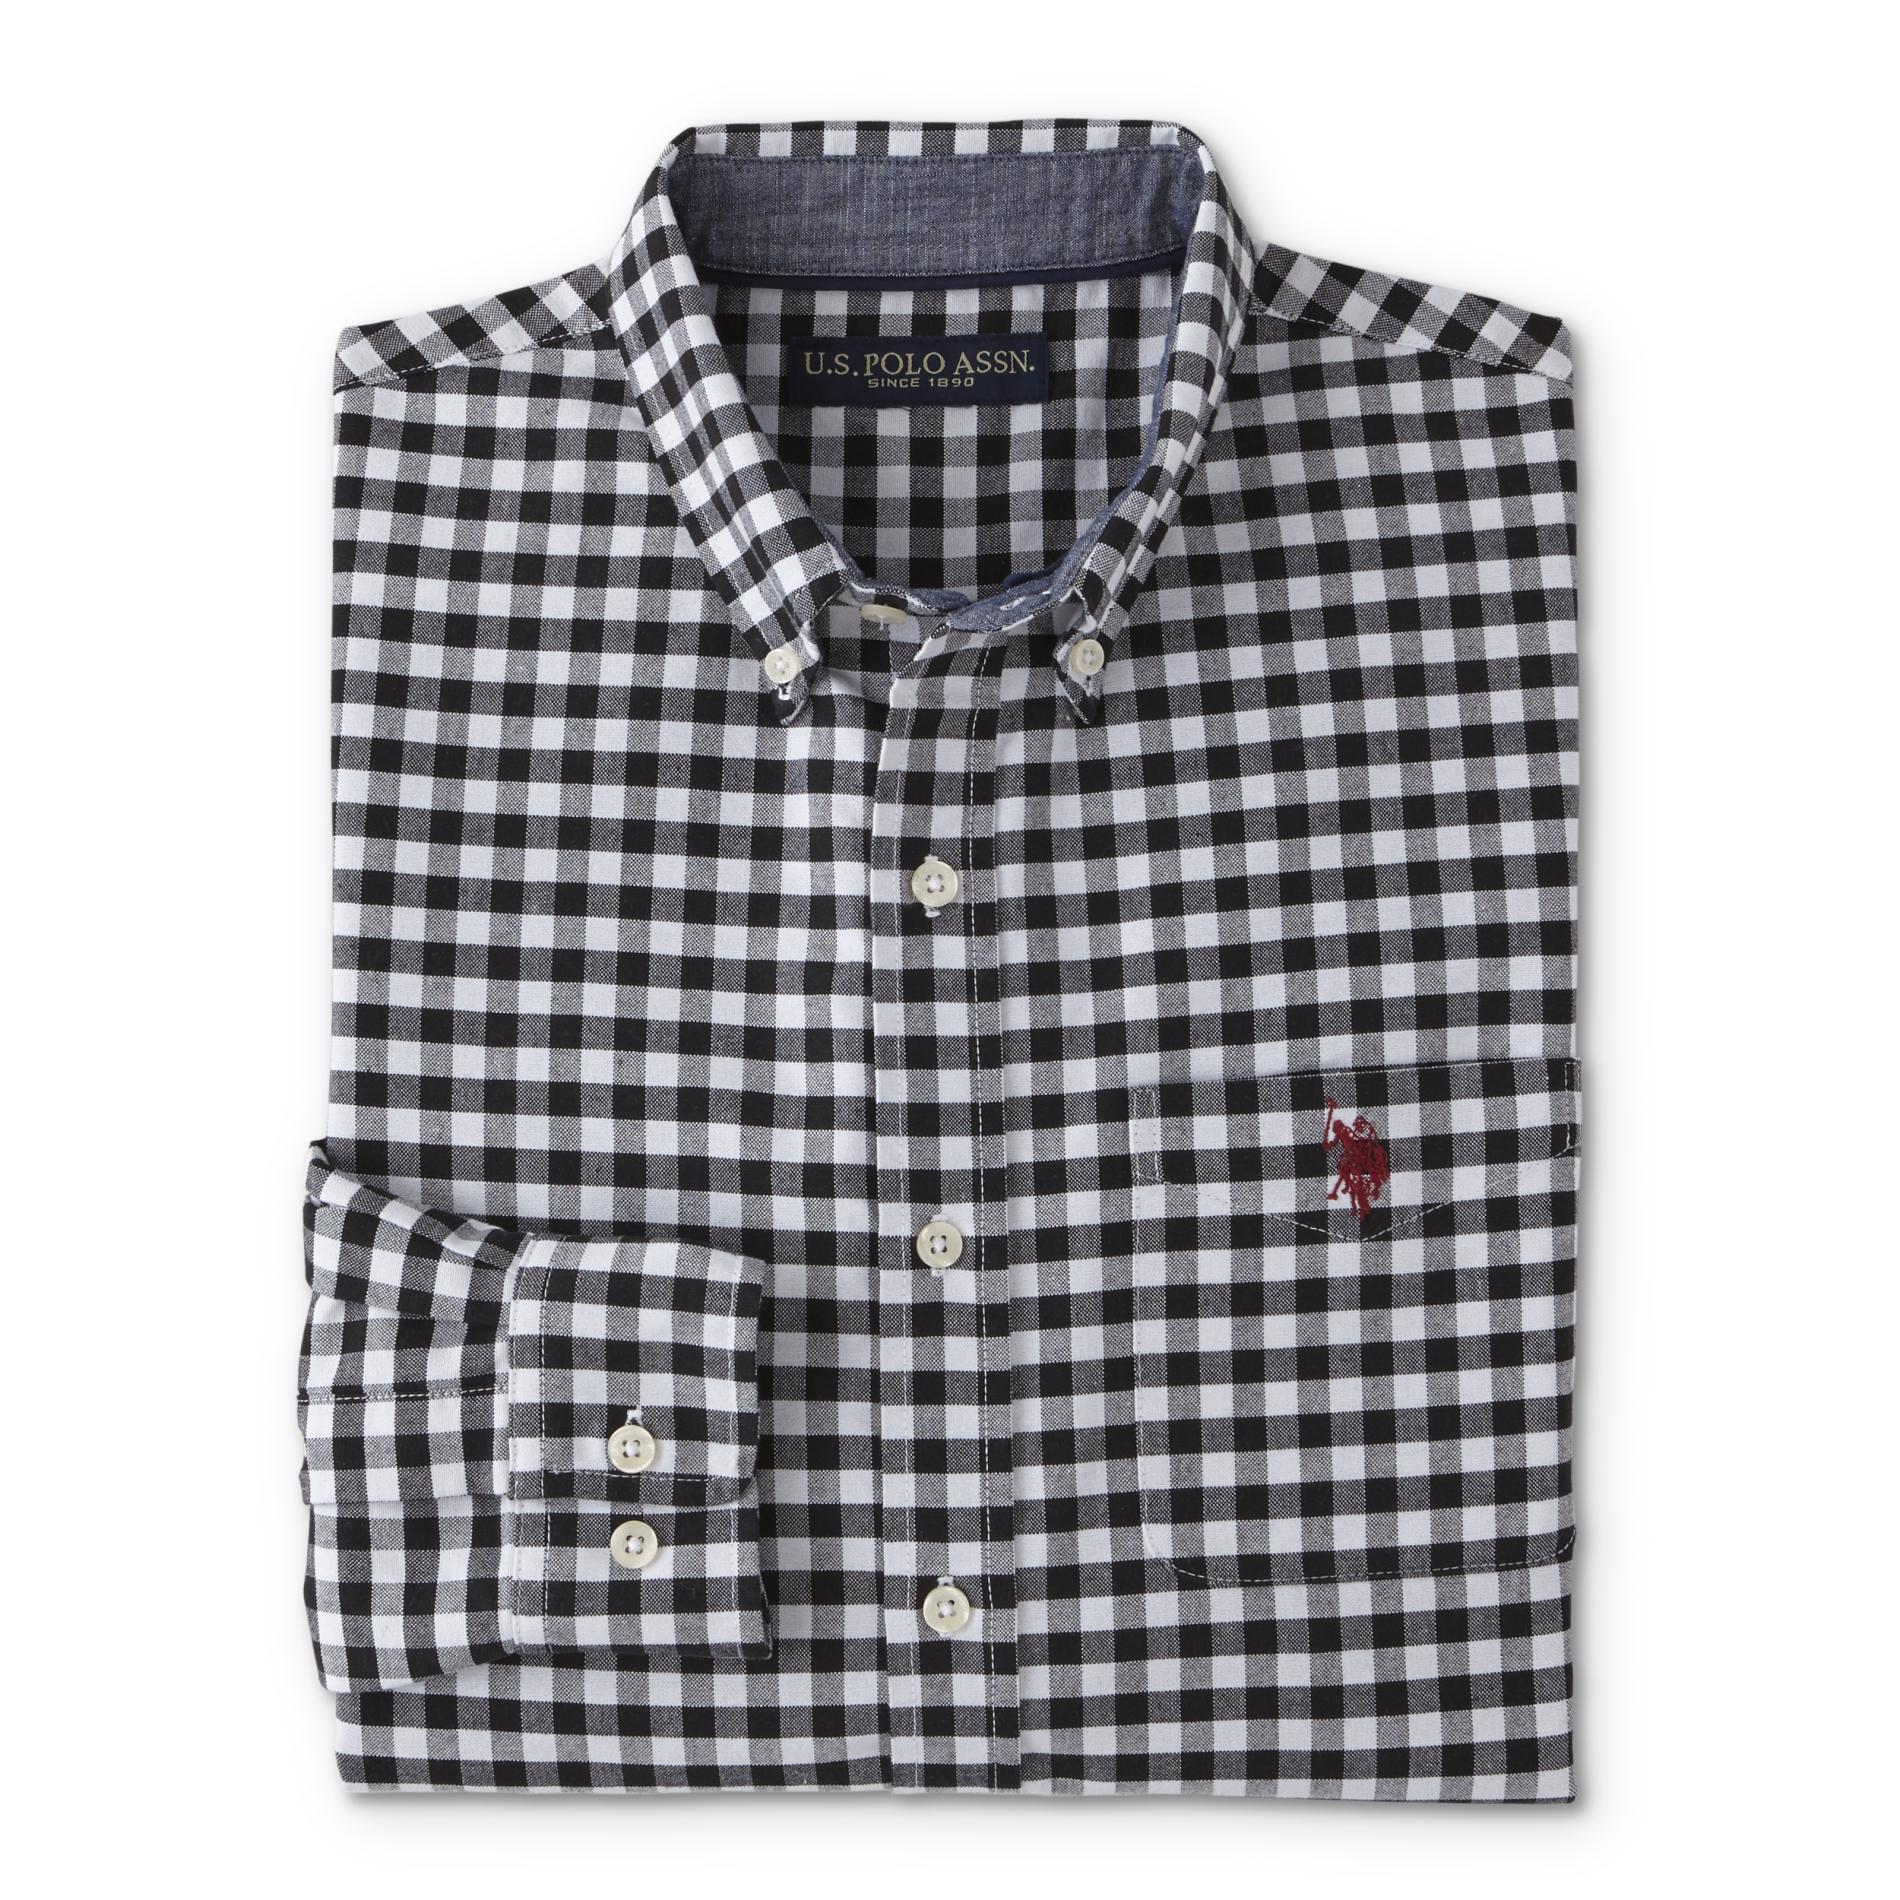 U.S. Polo Assn. Men's Slim Fit Button-Front Shirt - Checkered